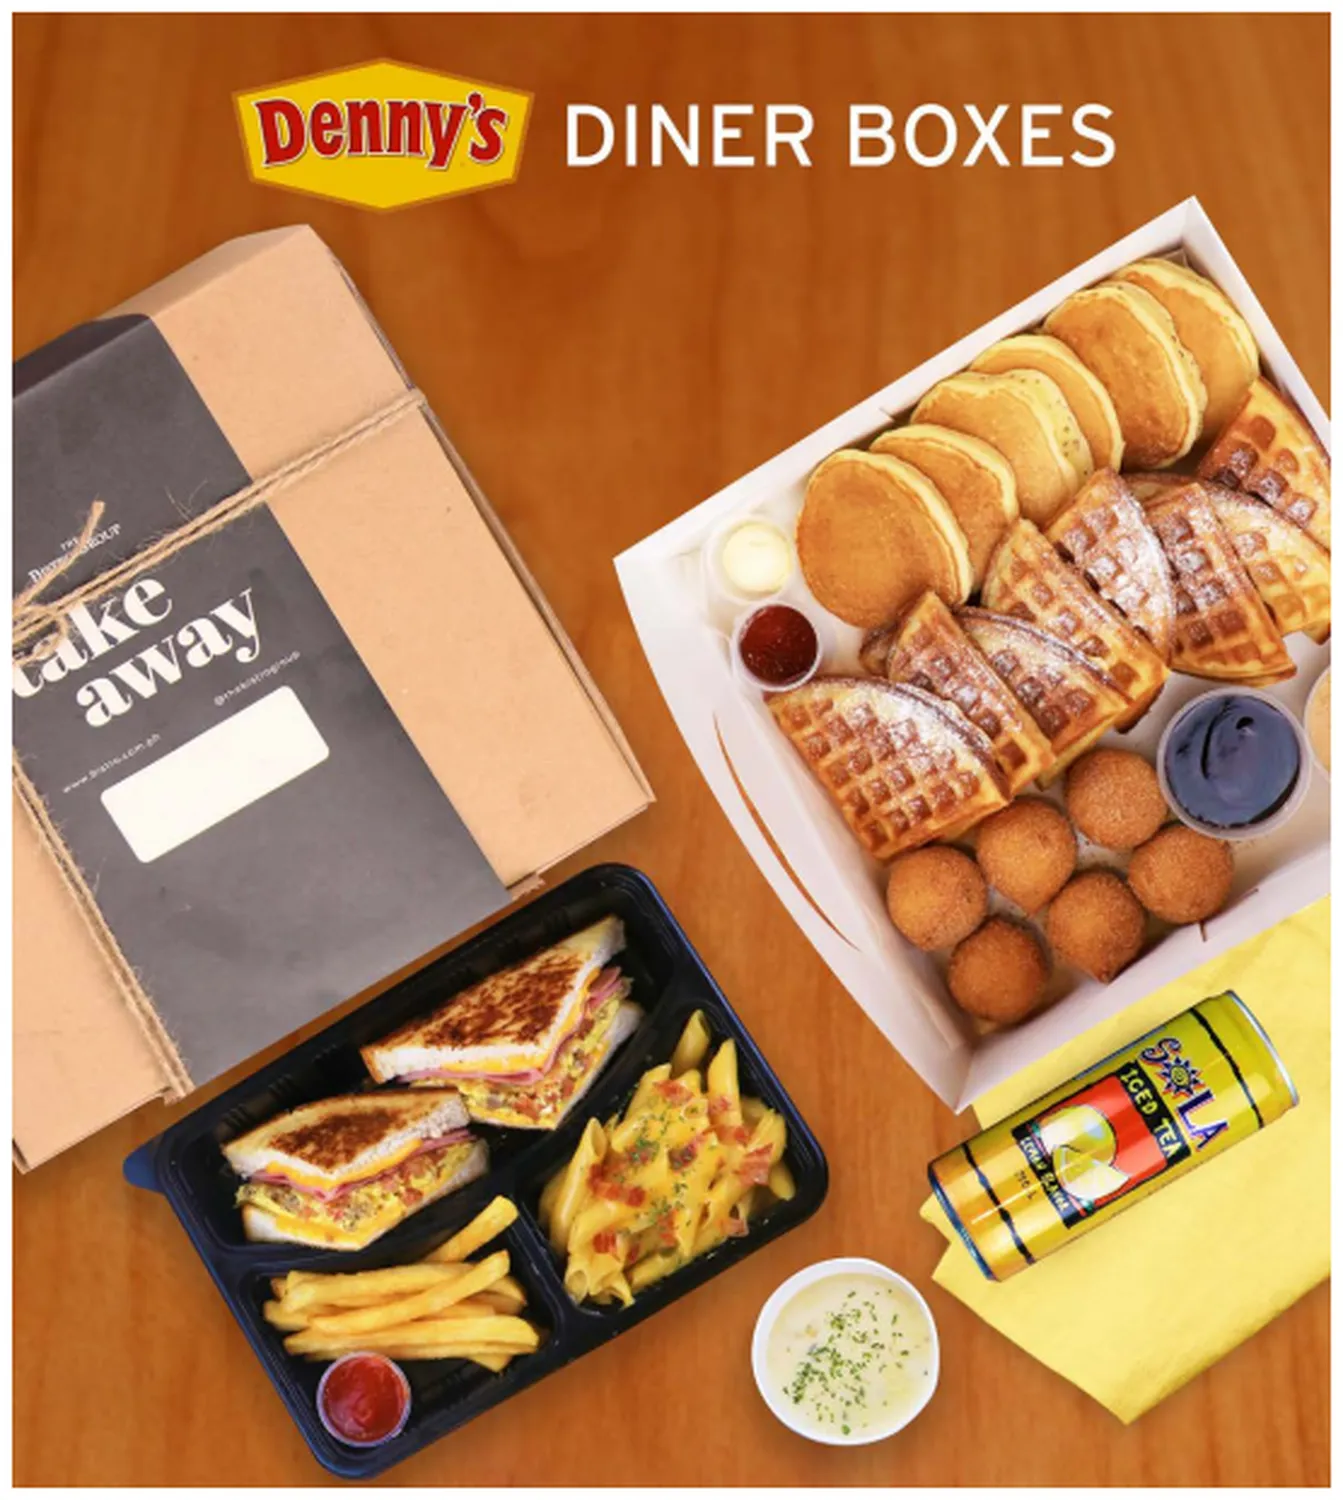 dennys menu philippine dennys diner boxes